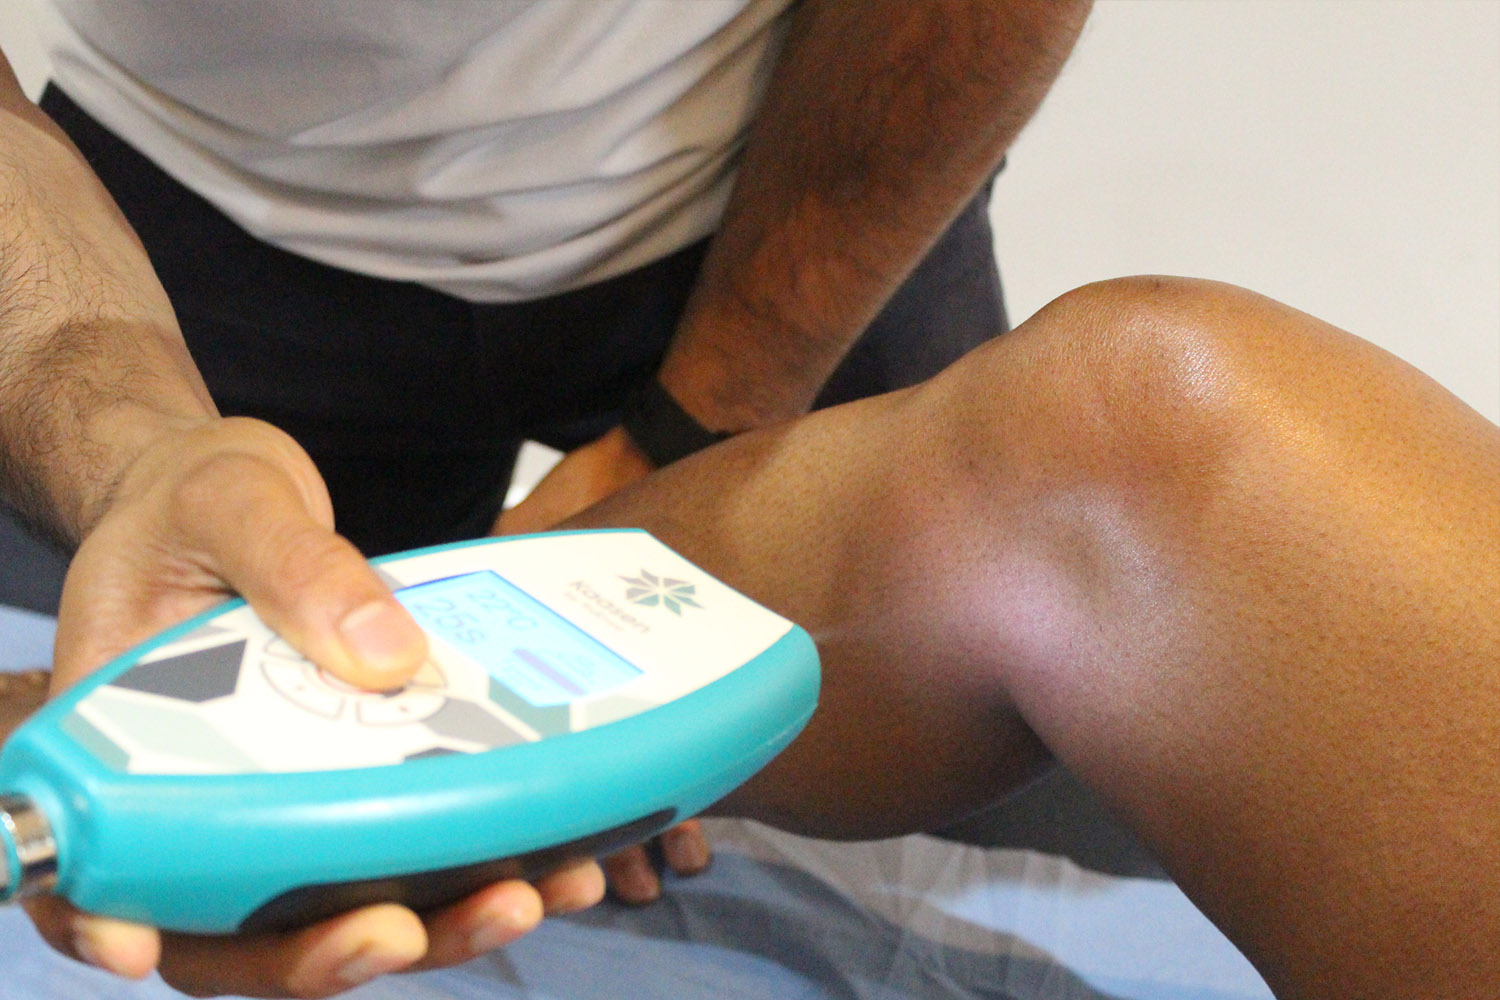 Kaasen device treating a knee